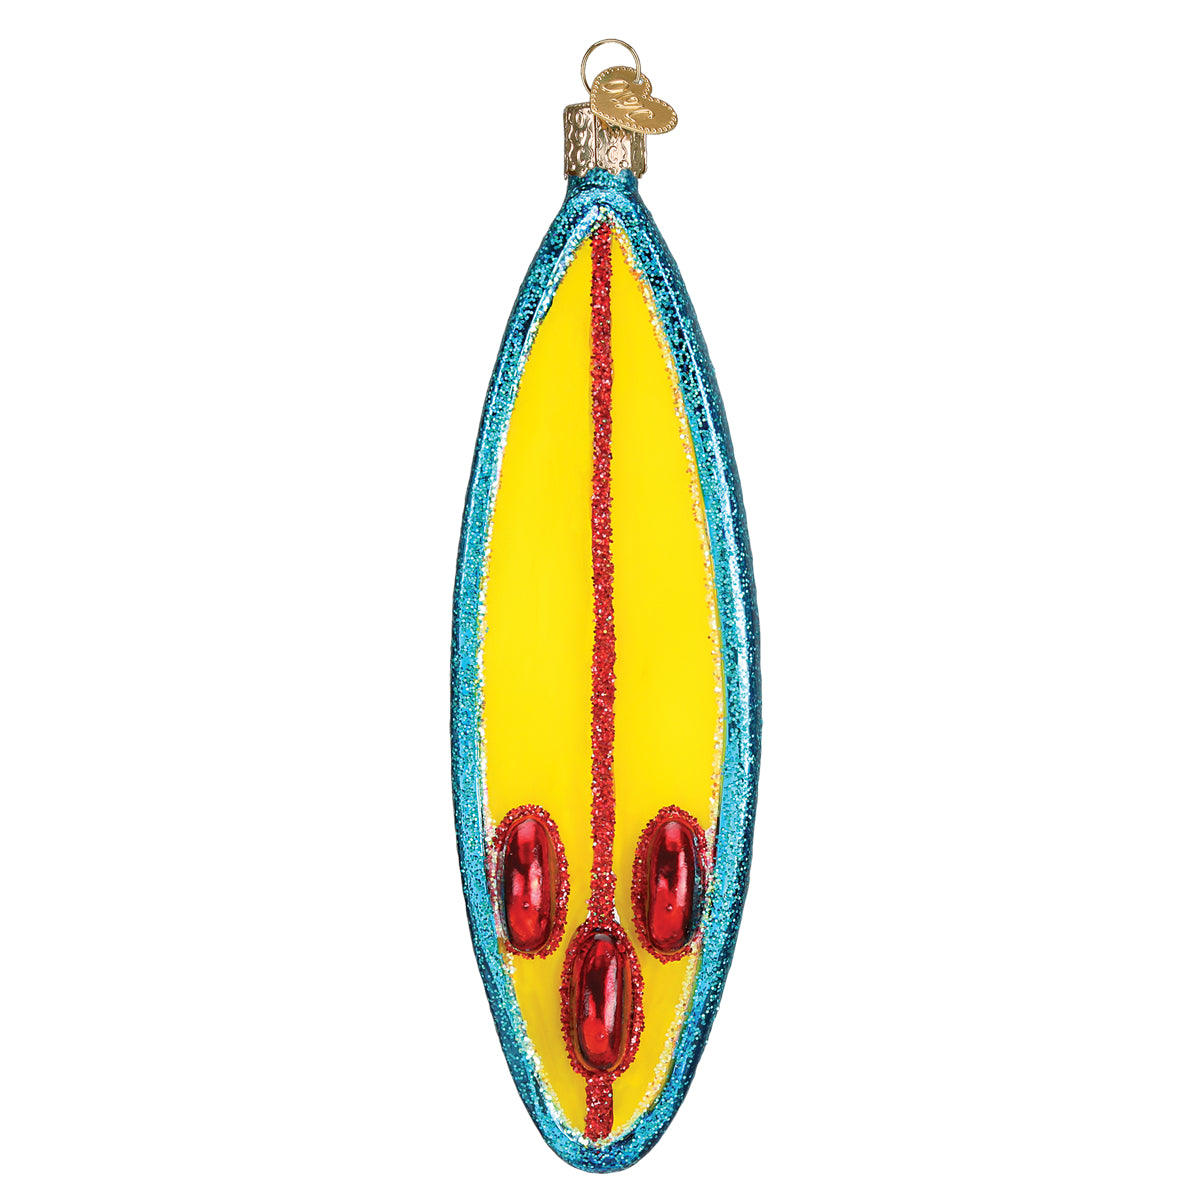 Surfboard Ornament